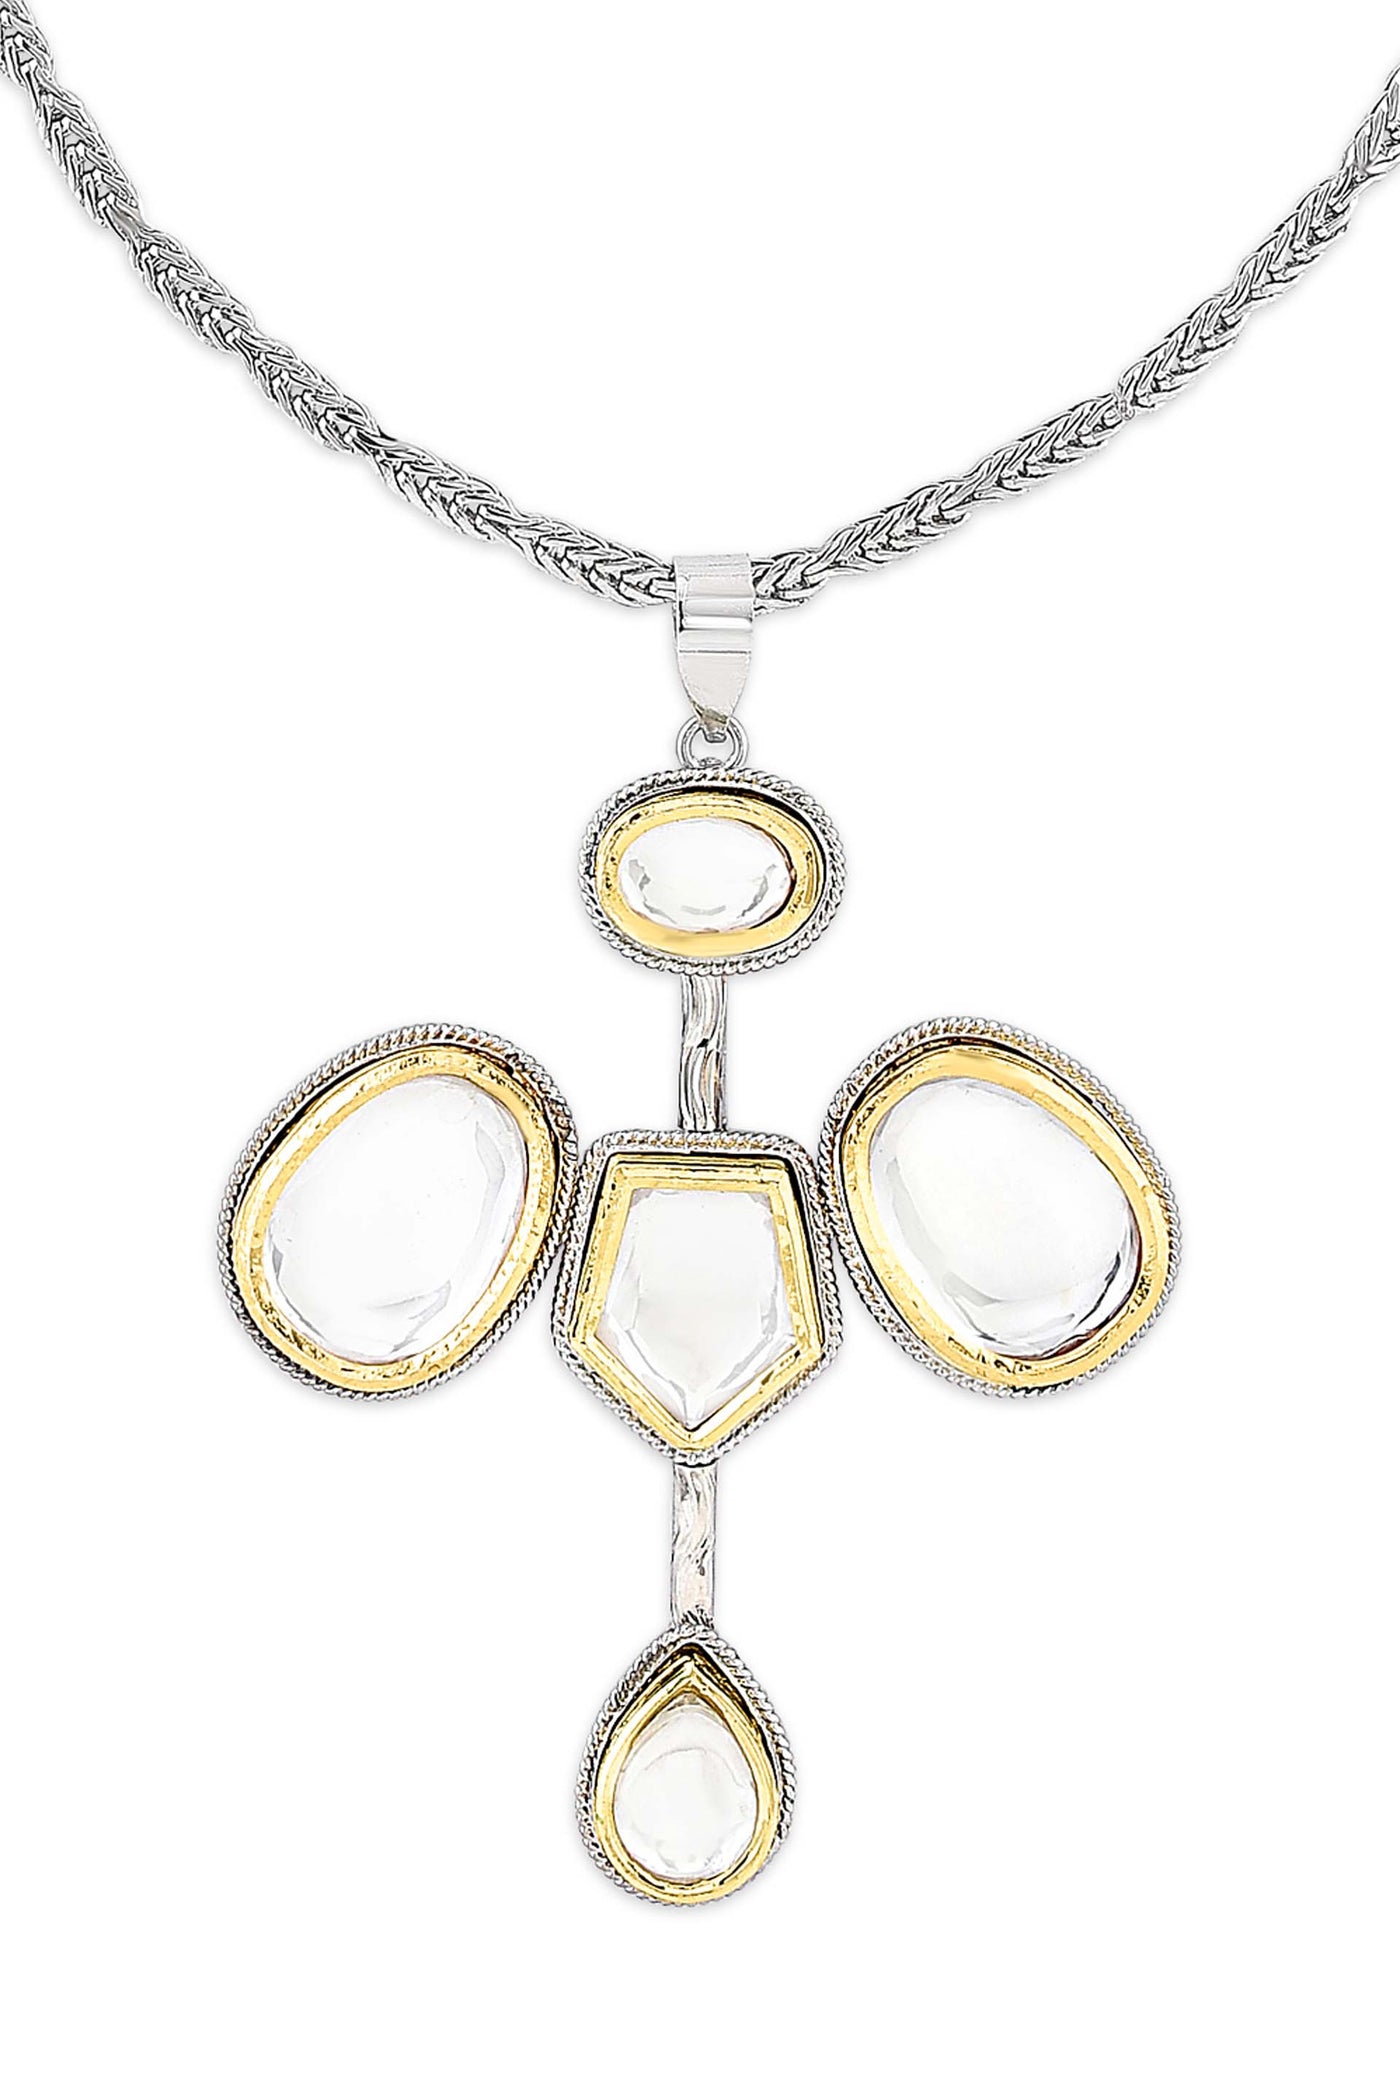 Valliyan polki Vatican necklace fashion jewellery online shopping melange singapore indian designer wear